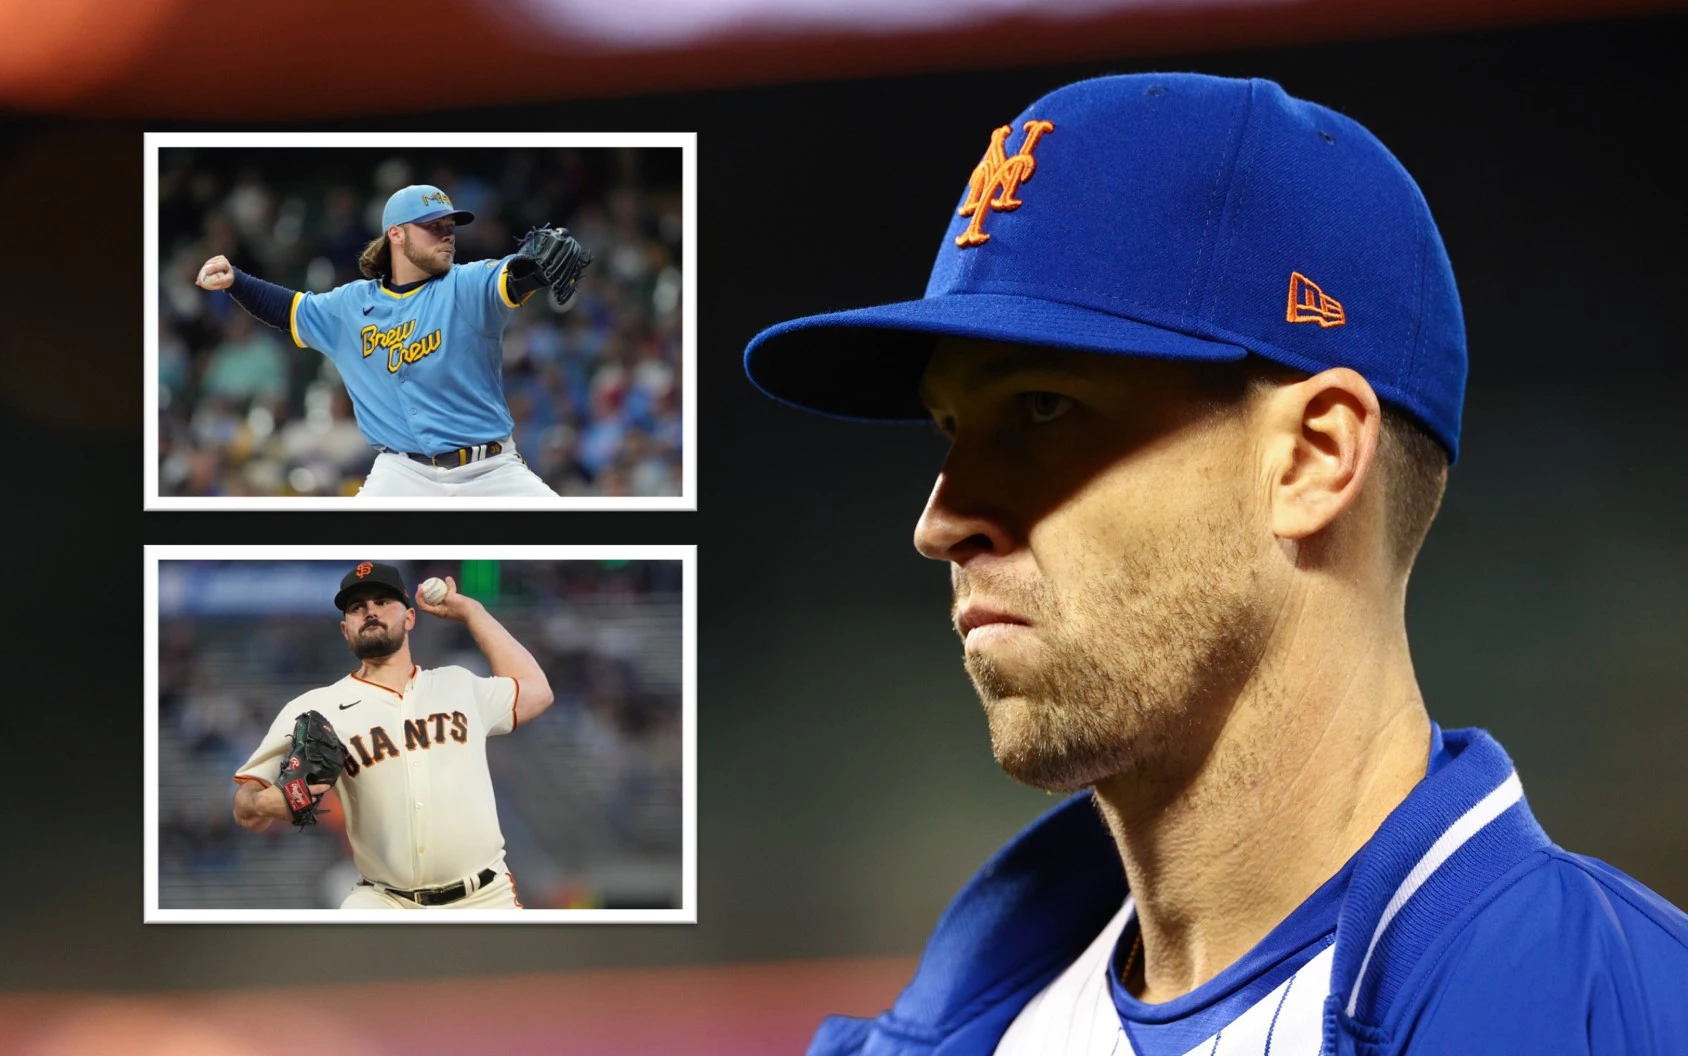 Mets are World Series Contenders: deGrom, Scherzer and Edwin